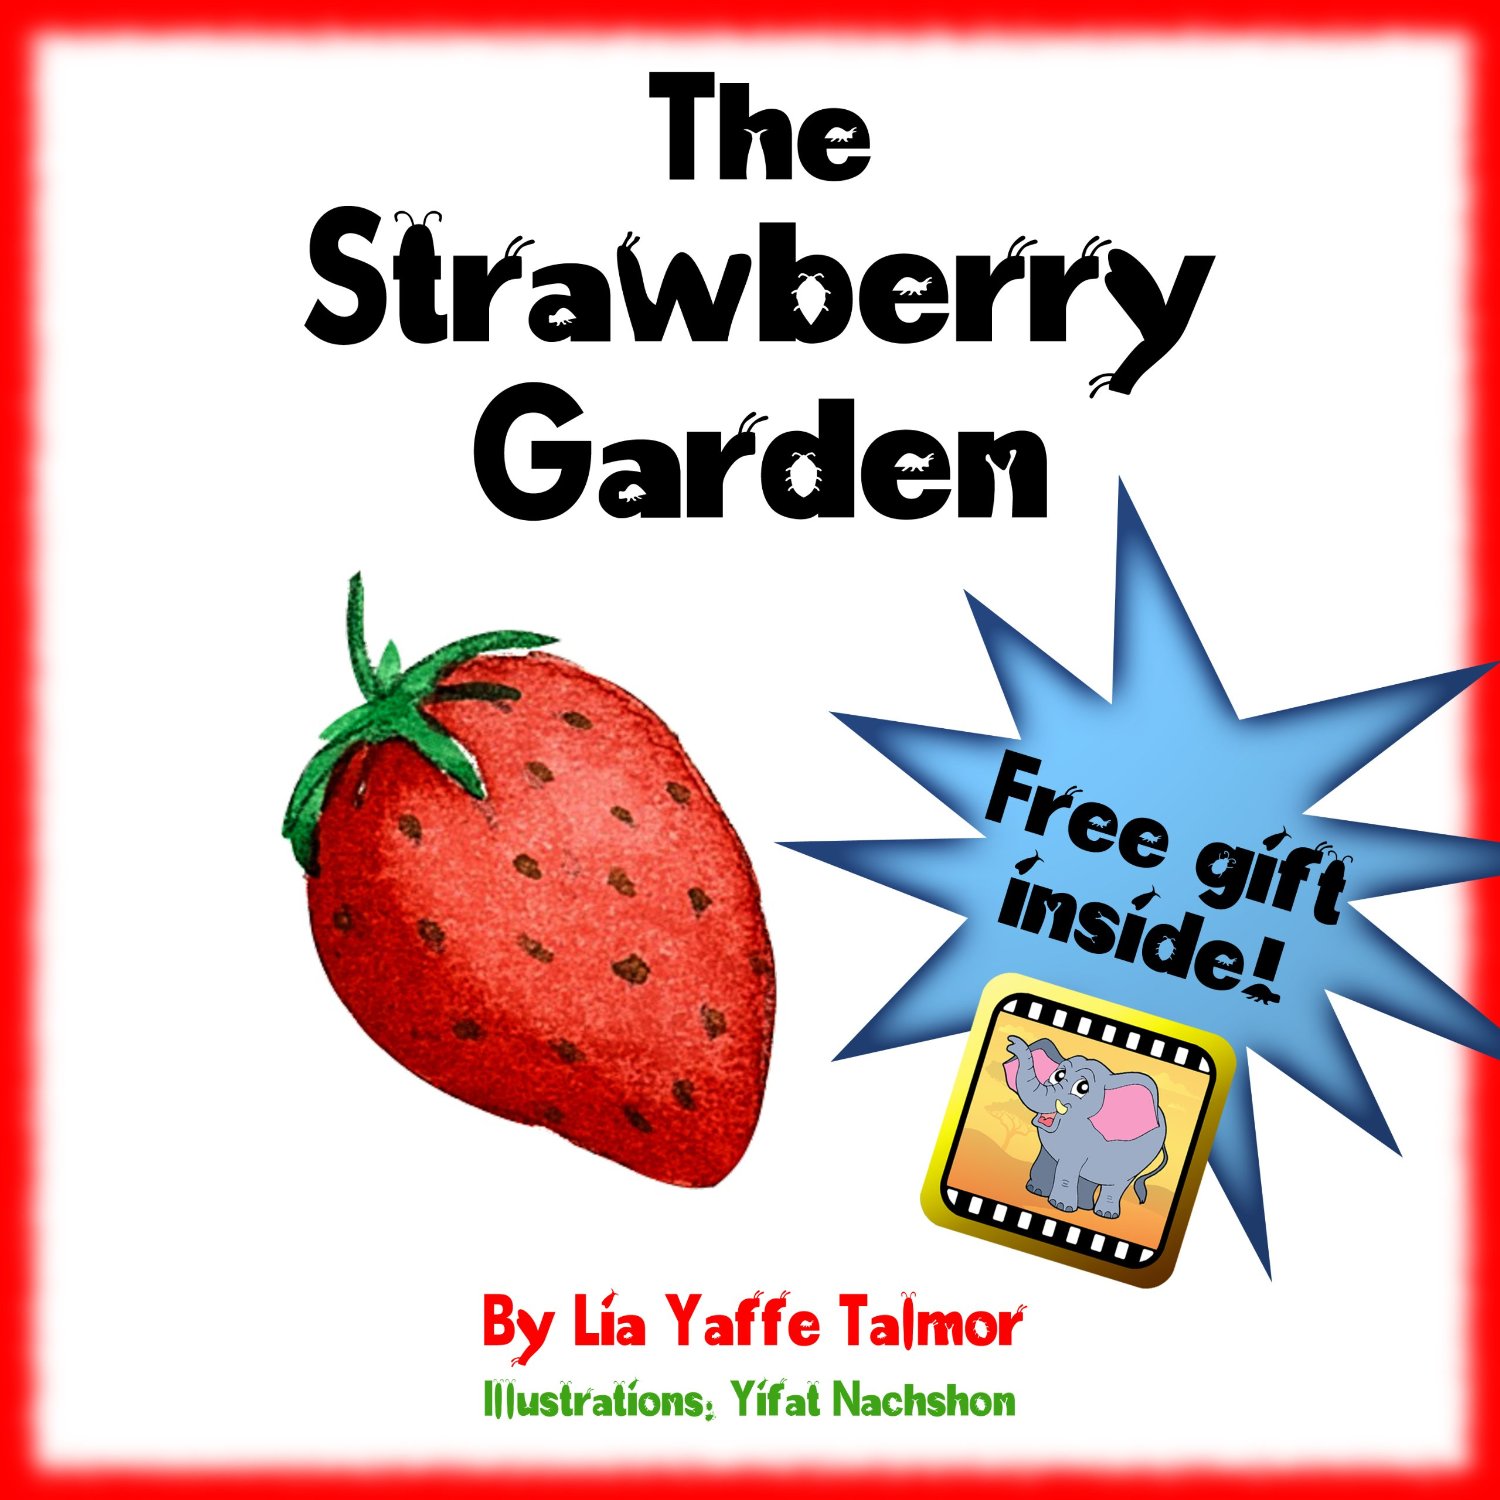 The Strawberry Garden by Lia Yaffe Talmor